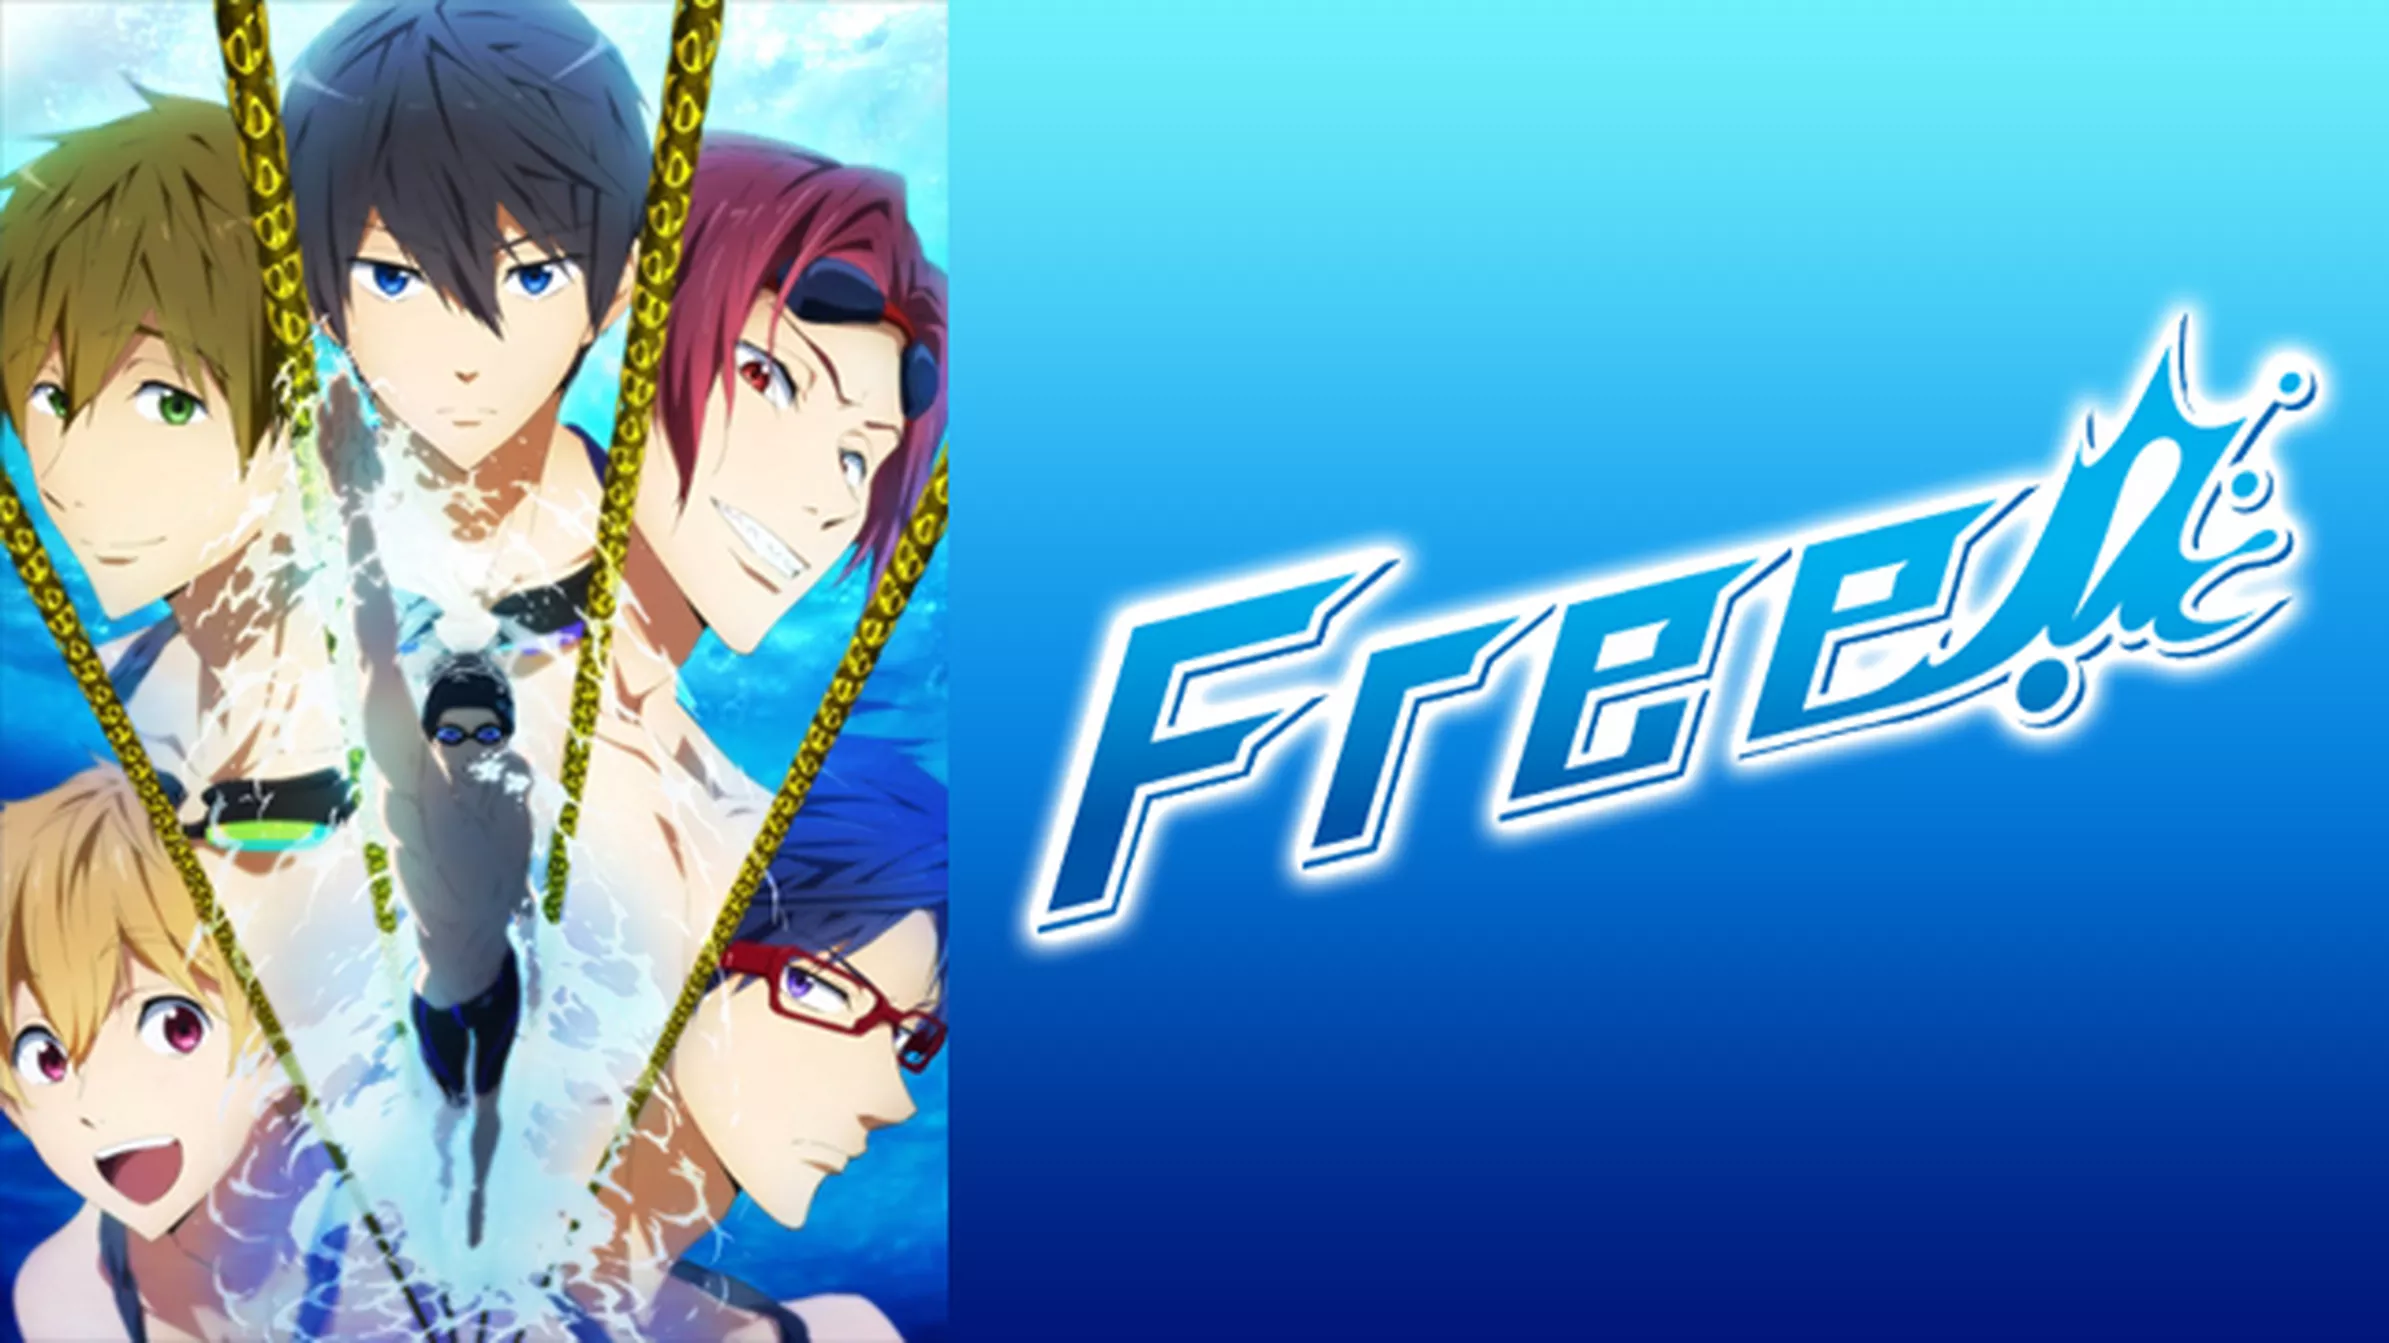 TVアニメ「Free!」